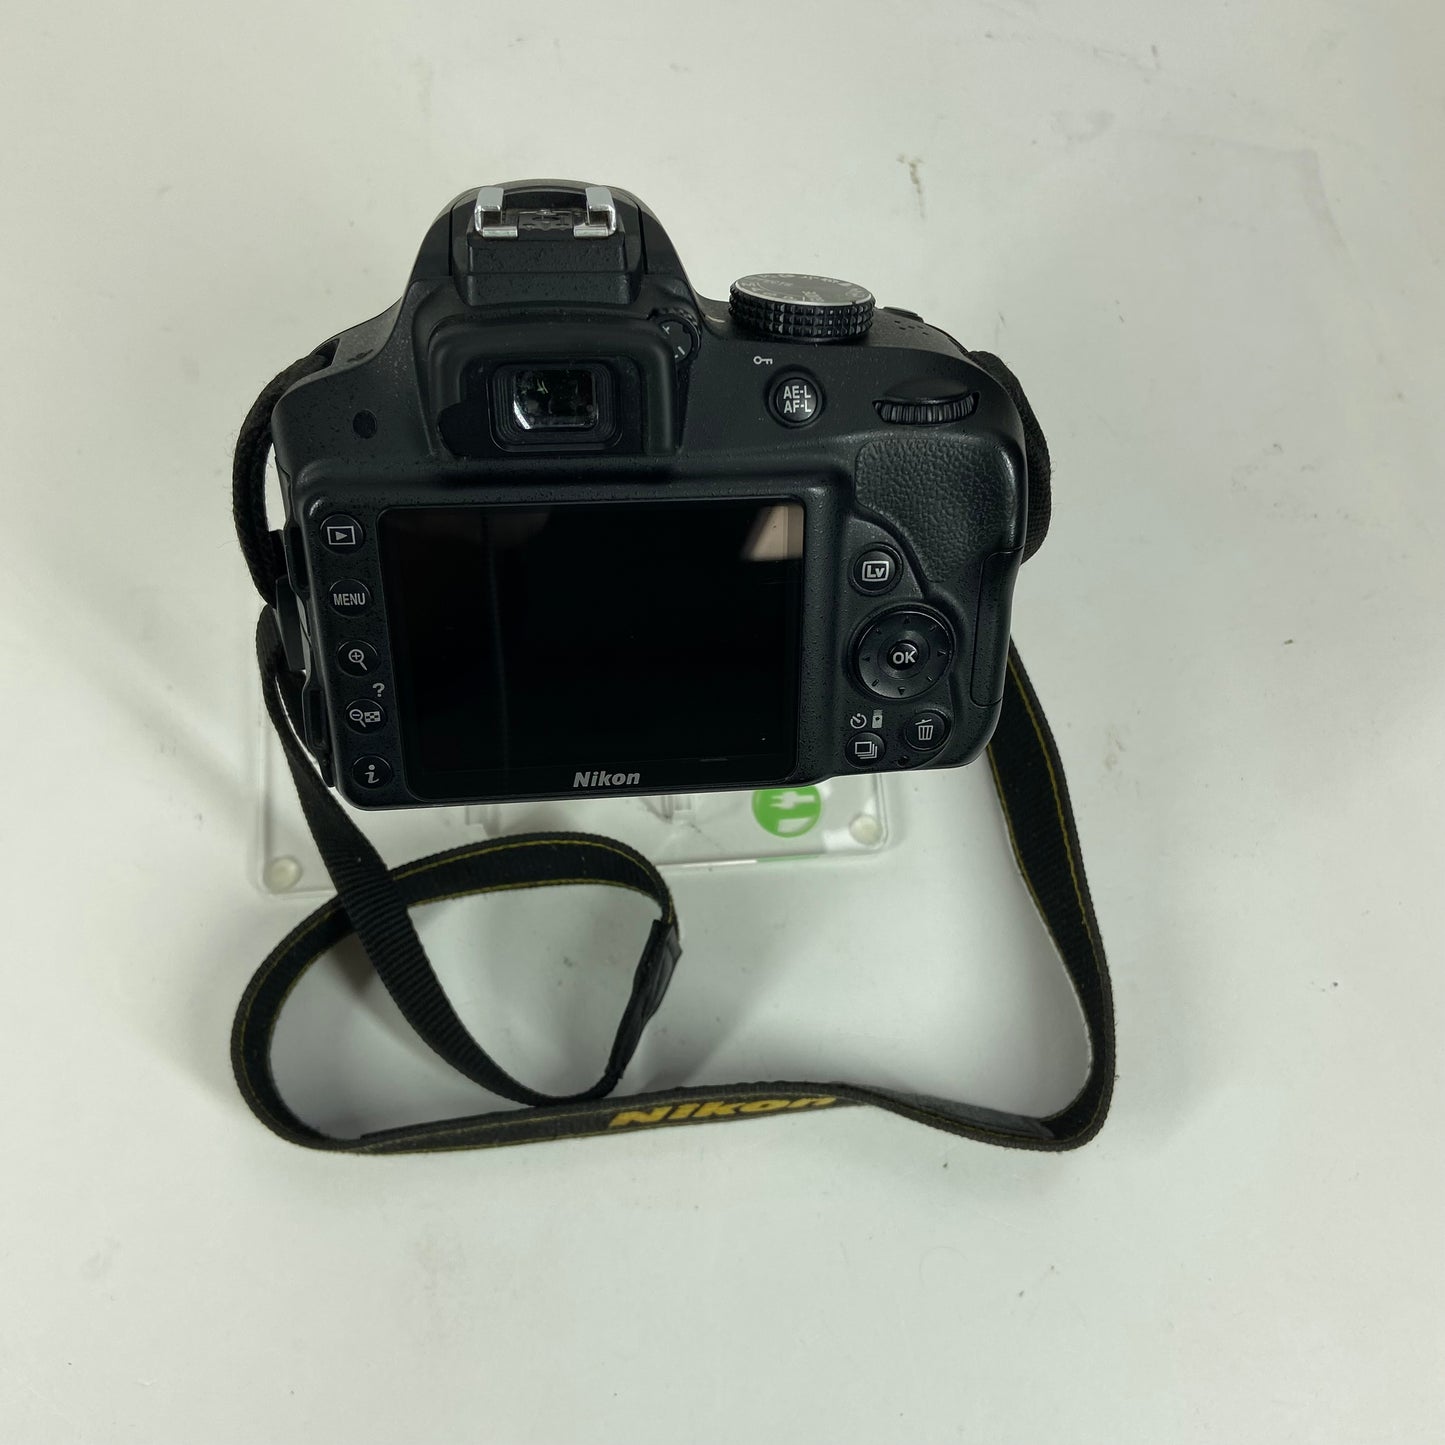 Nikon D3300 24.2MP Digital SLR DSLR Camera 29298 Shutter Count with Accessories